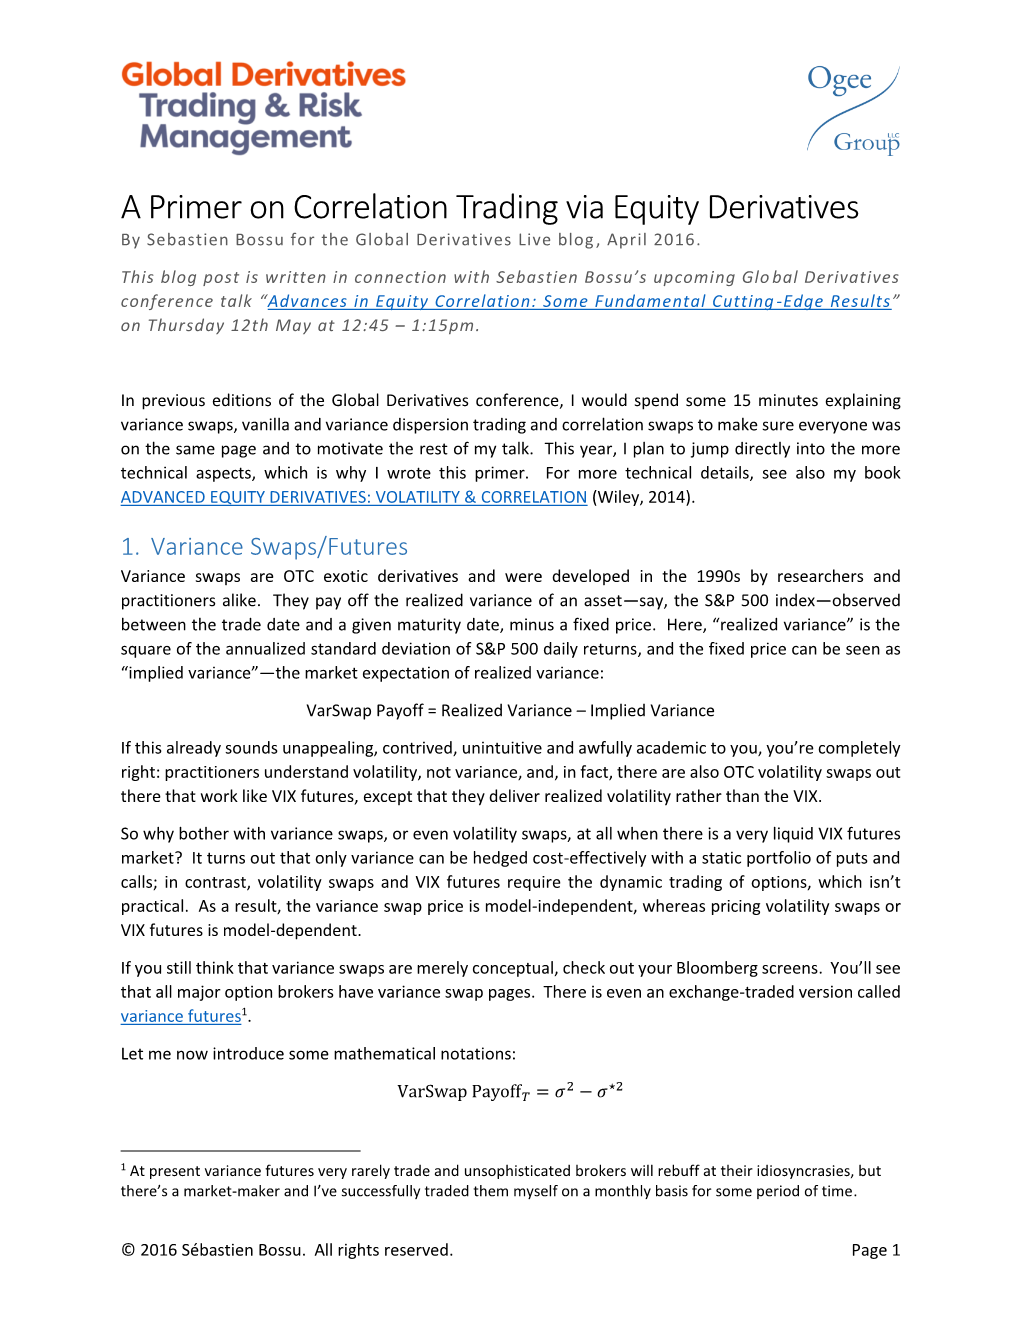 A Primer on Correlation Trading Via Equity Derivatives by Sebastien Bossu for the Global Derivatives Live Blog, April 2016